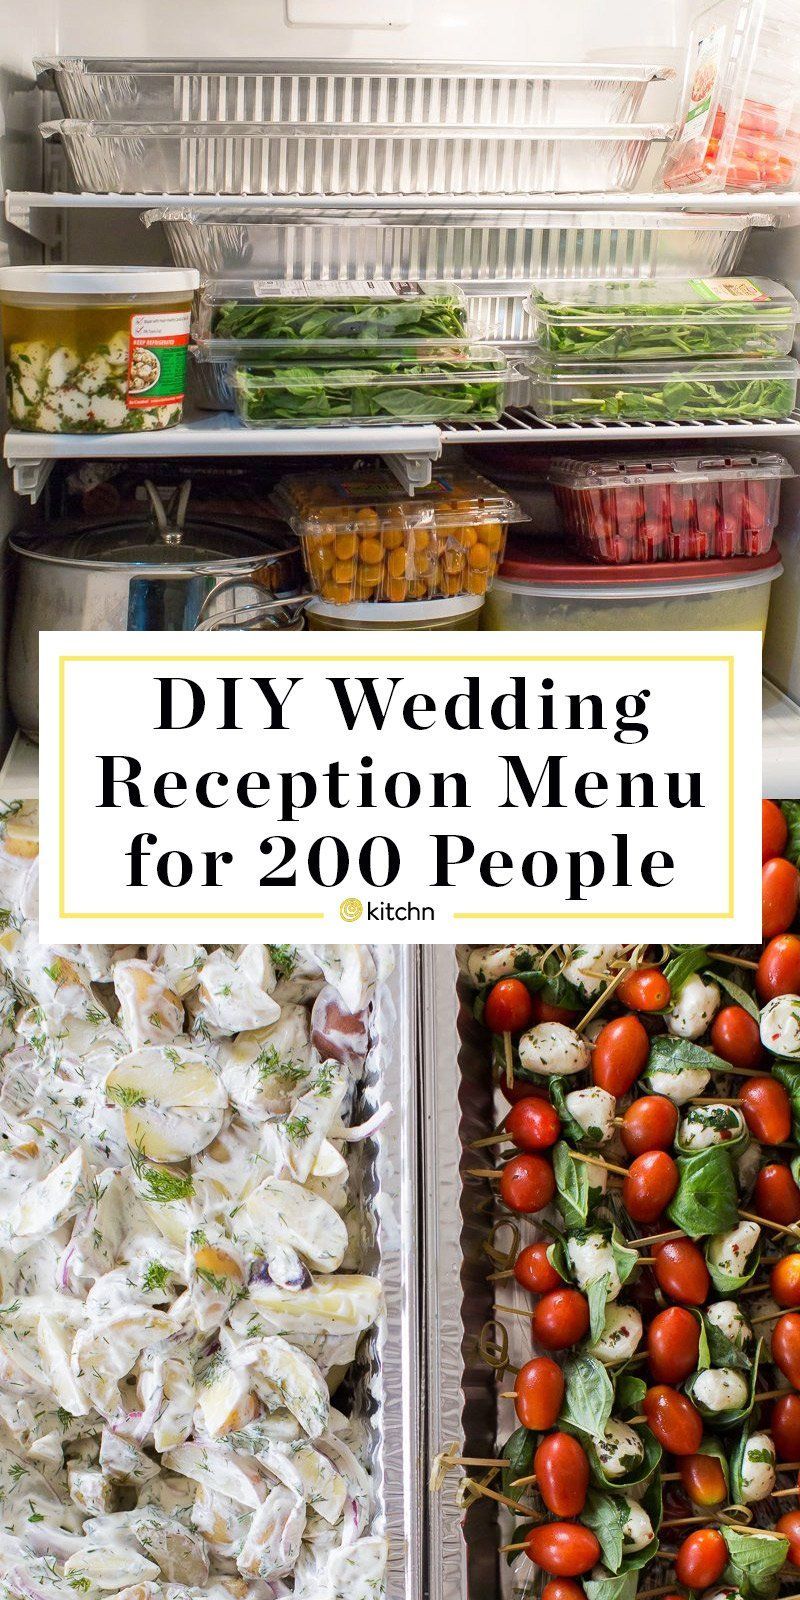 A DIY Wedding Reception for 200: The Menu (With Planning Tips) - A DIY Wedding Reception for 200: The Menu (With Planning Tips) -   15 diy Wedding appetizers ideas